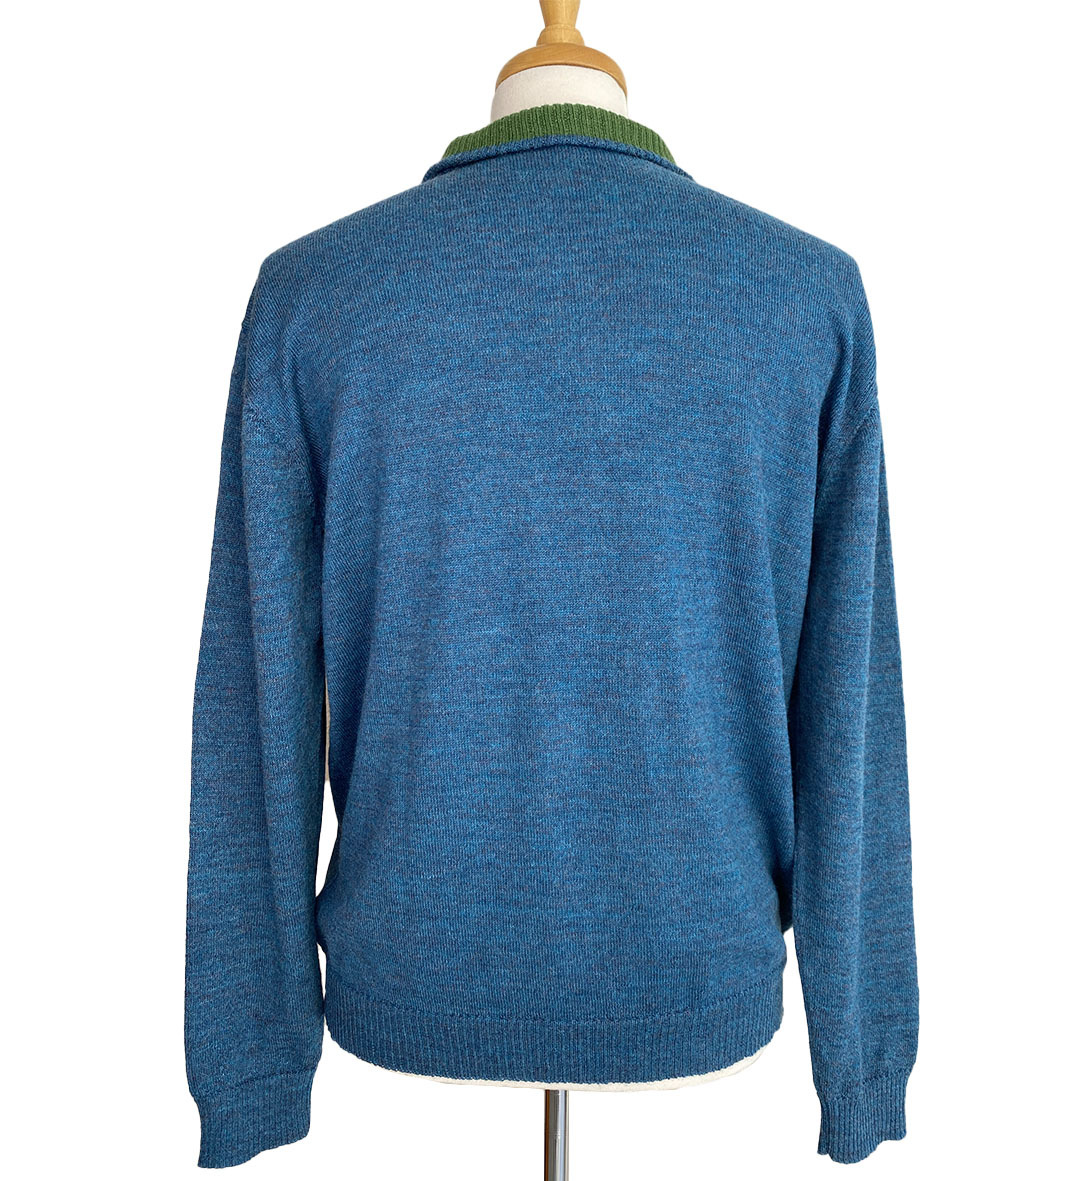 NEW - Brent Half Zip Sweater - Blue/Green - 2